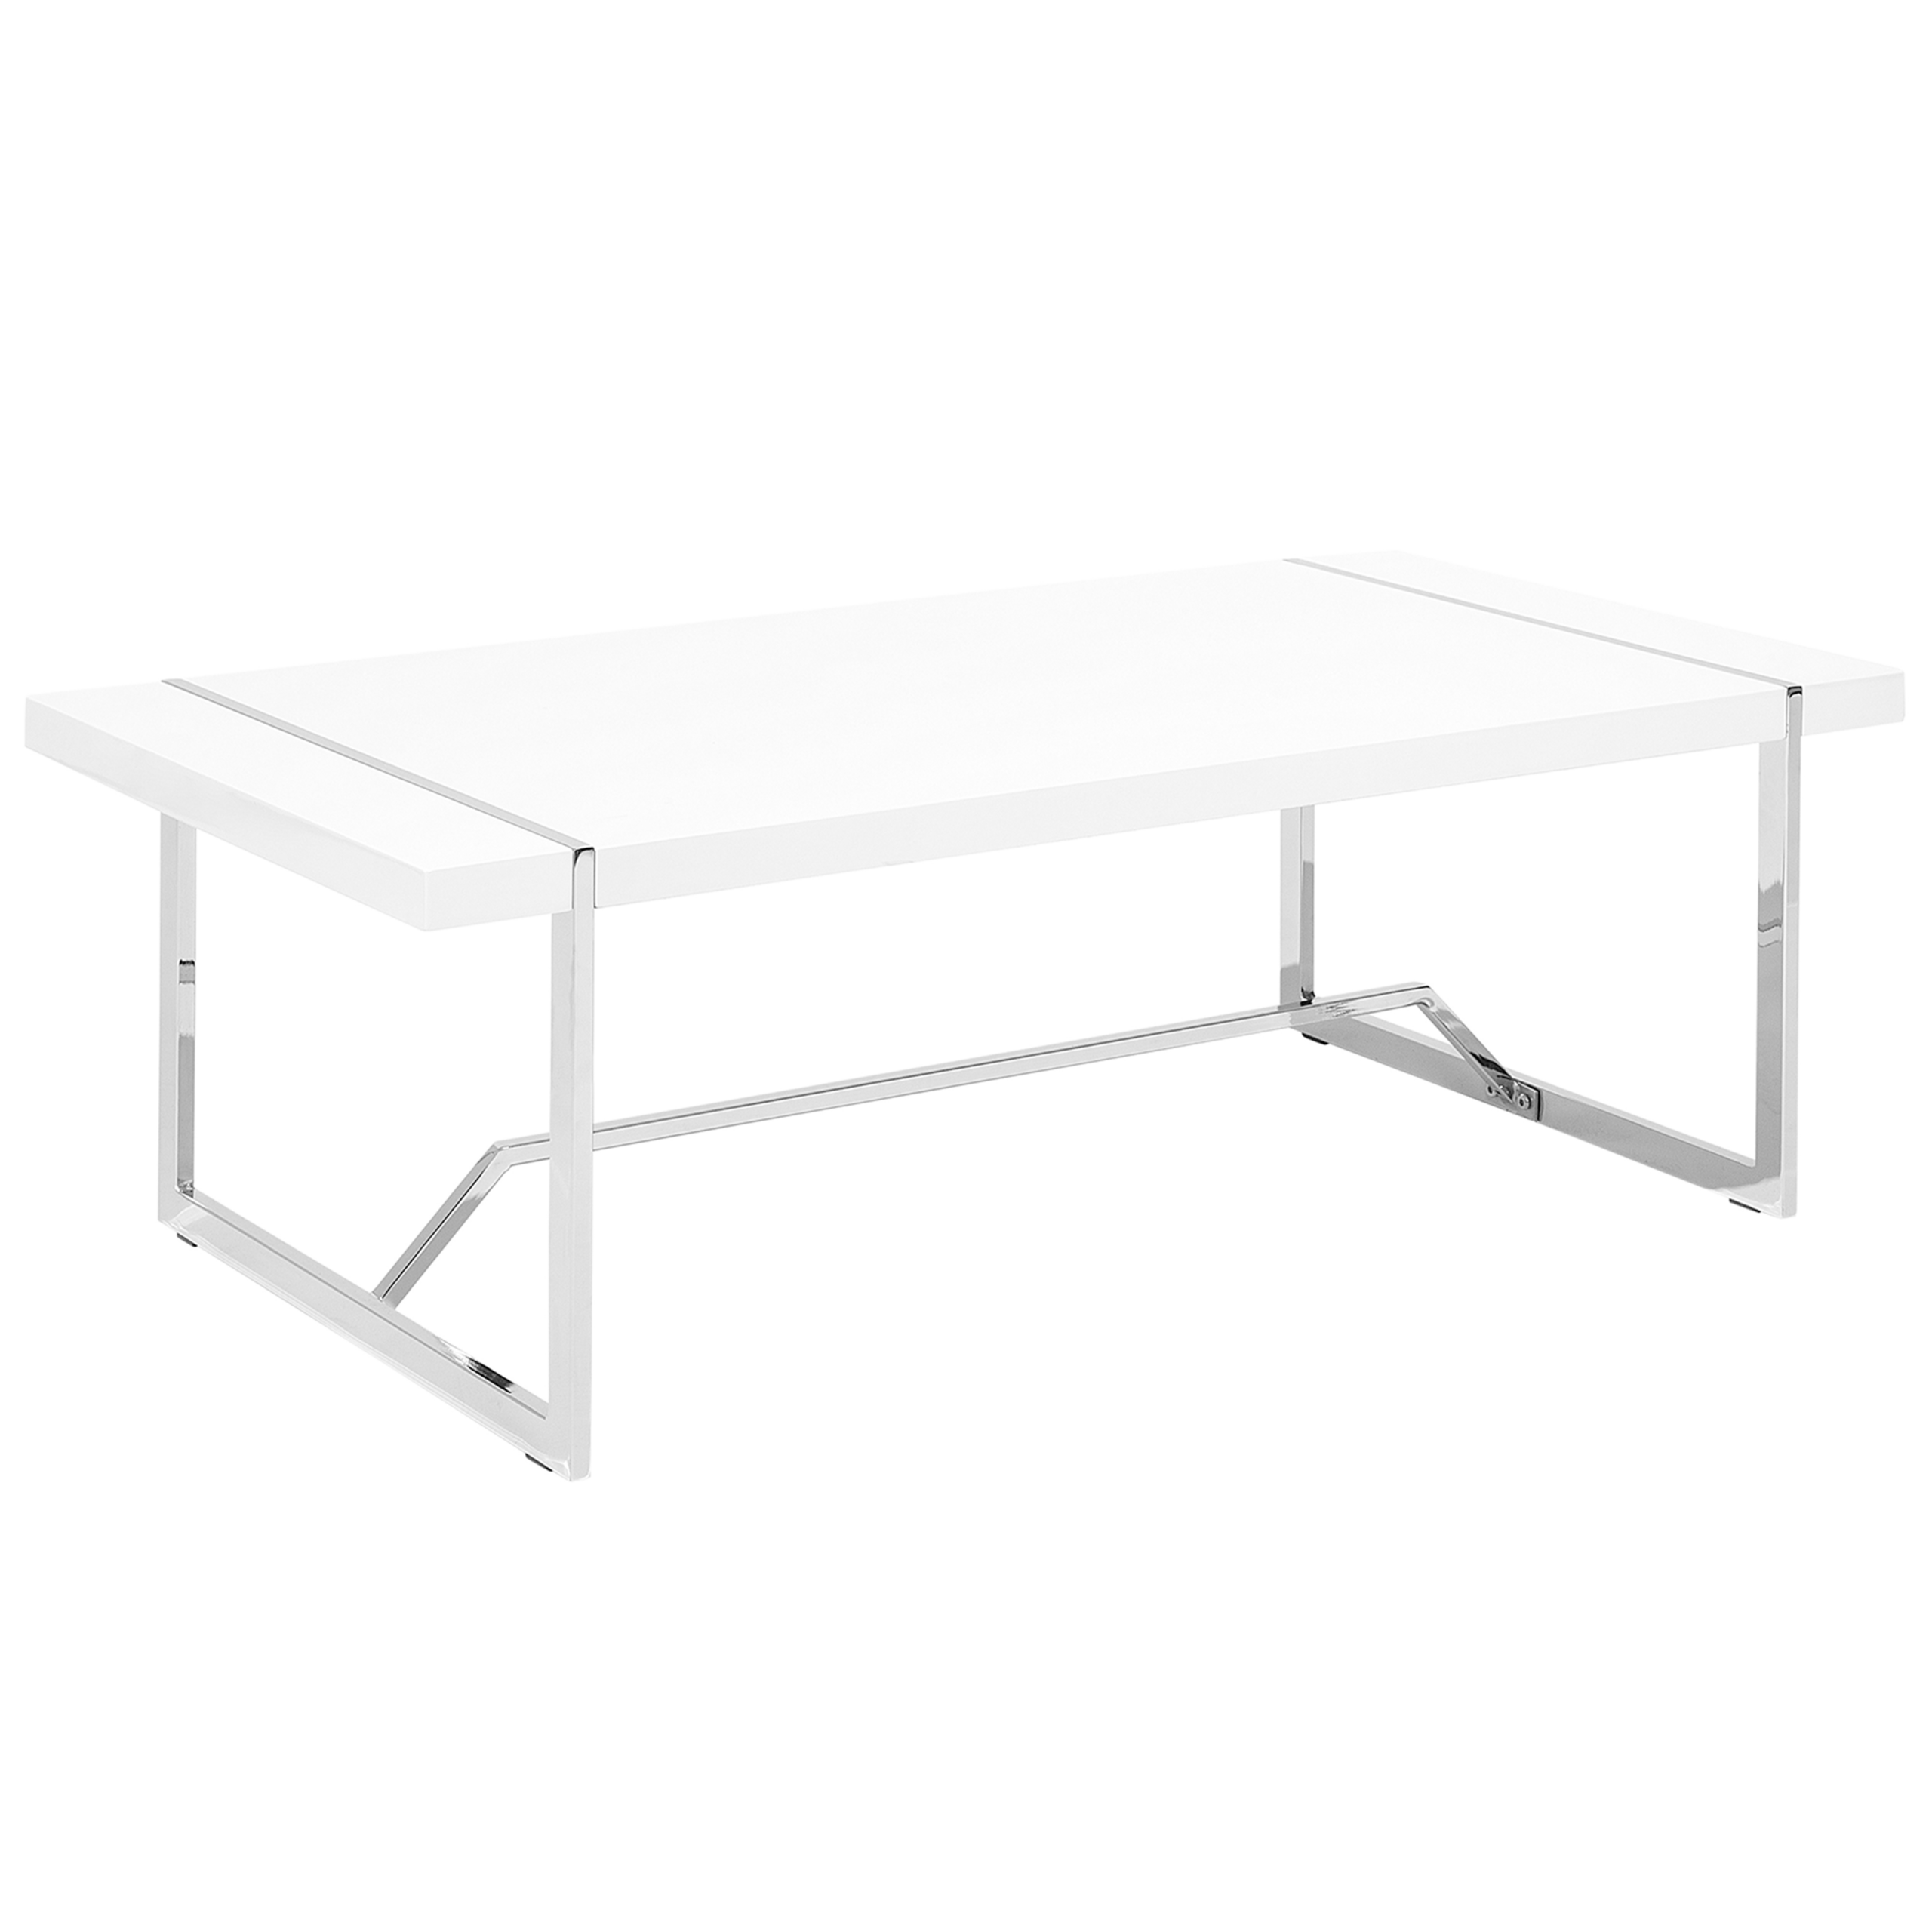 Beliani Coffee Table White 120 x 60 cm Metal Silver Legs Rectangular High Gloss Top Modern Design